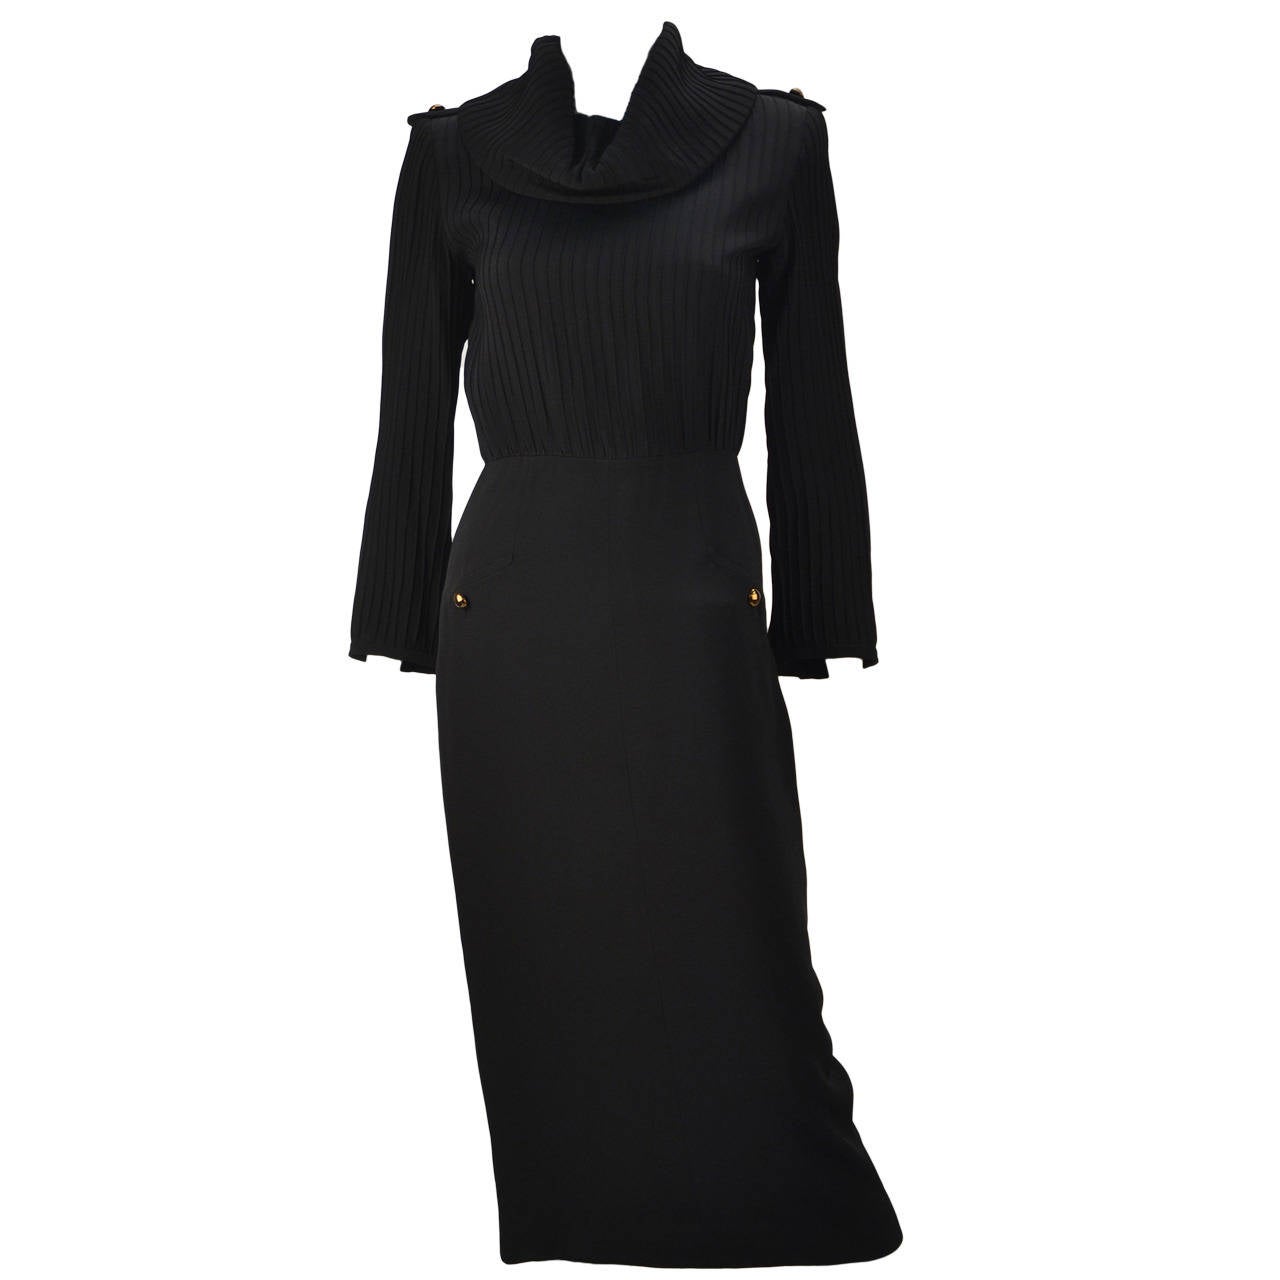 1960s Louis Feraud Black Dress